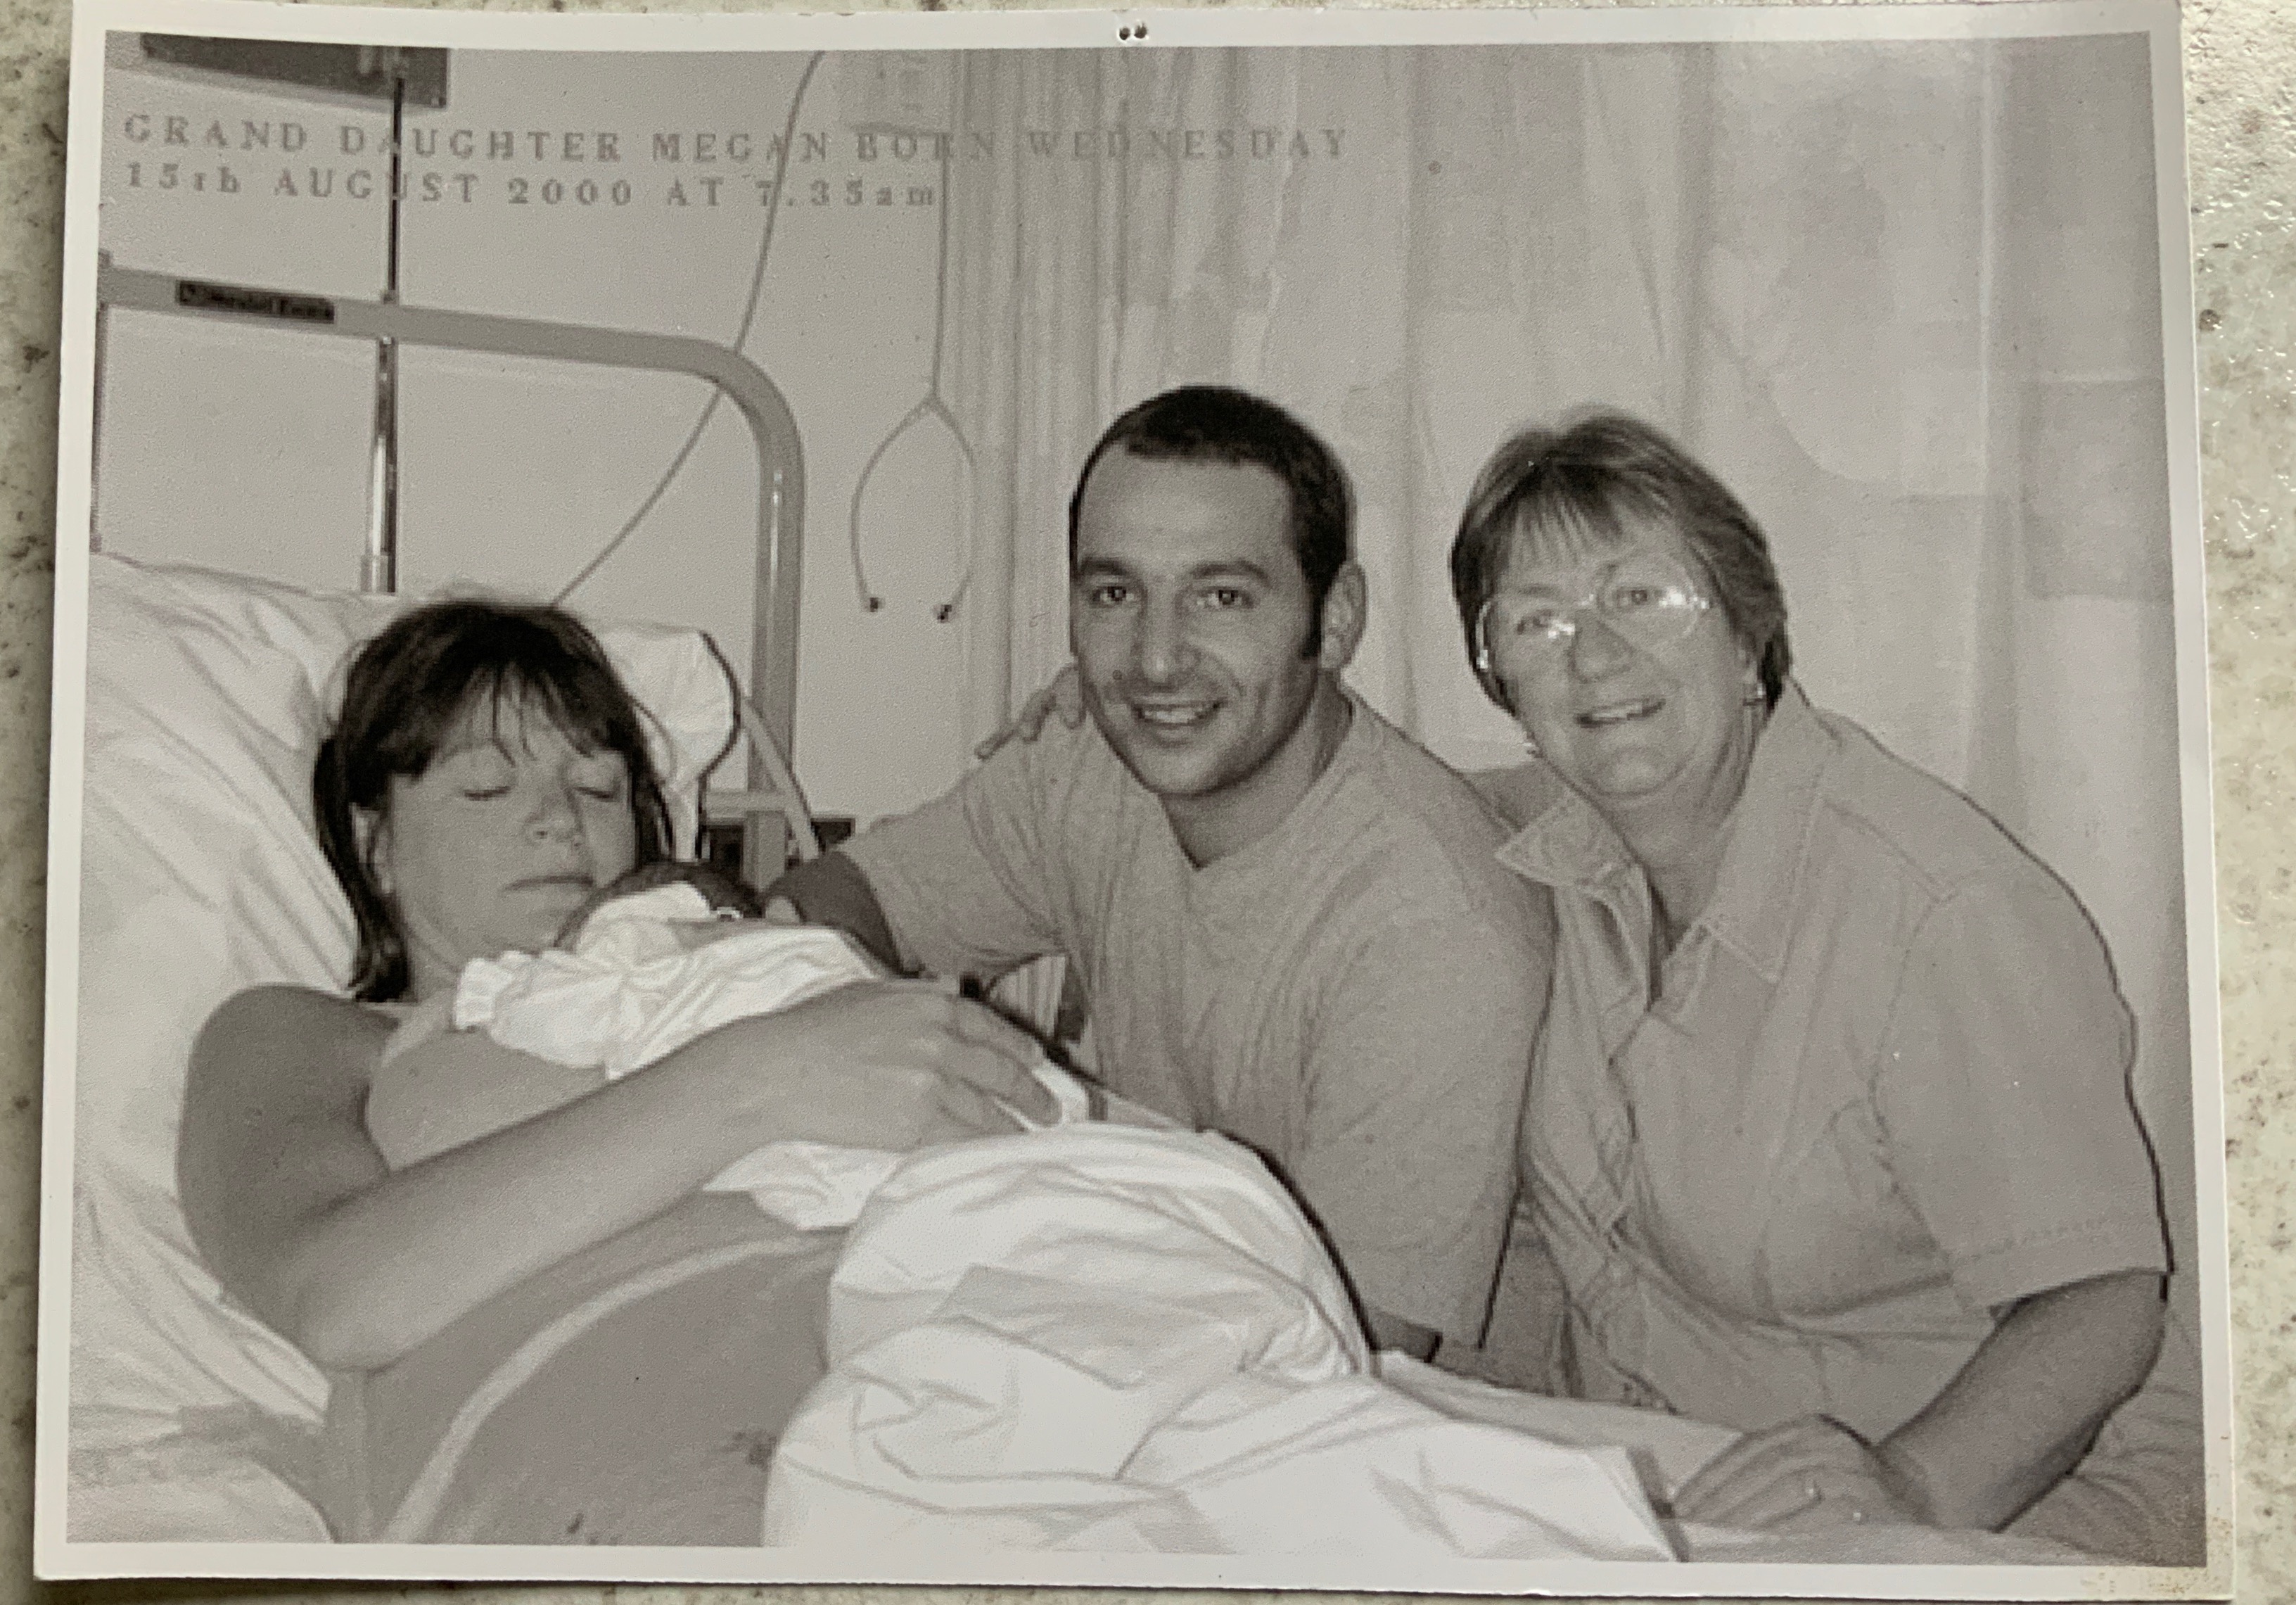 Birth of granddaughter Megan ,19 August 2000